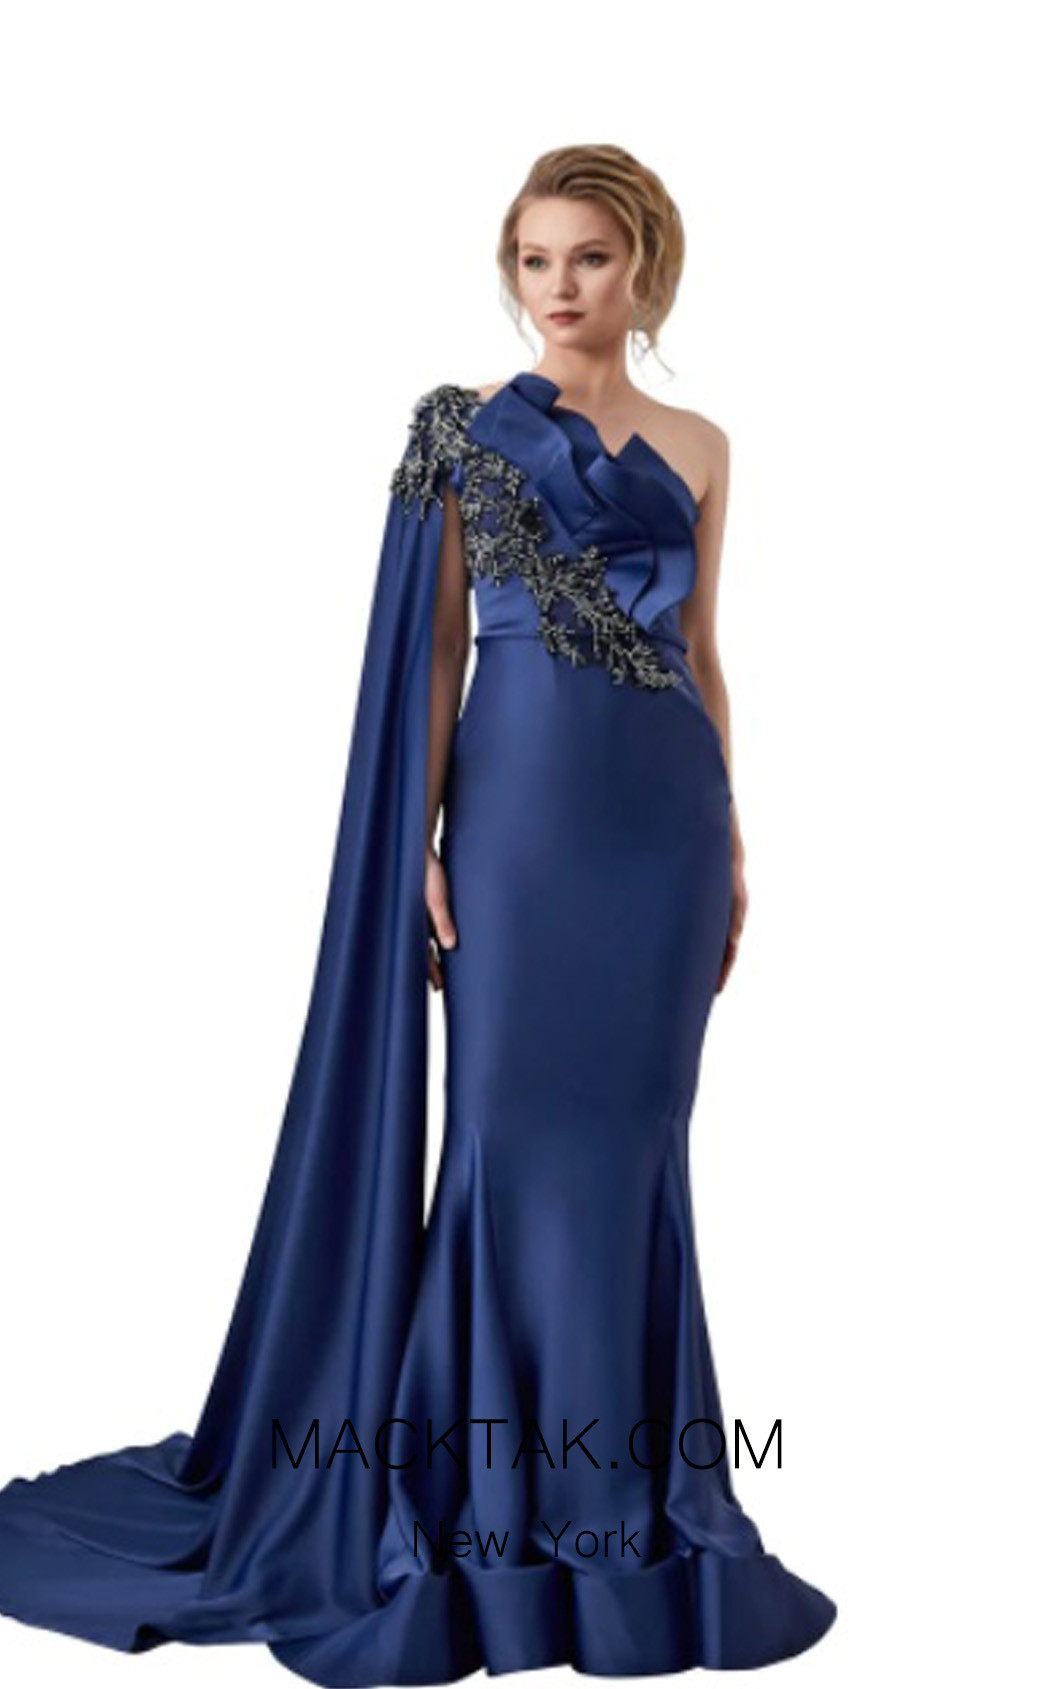 MackTak Couture 4926 Dress